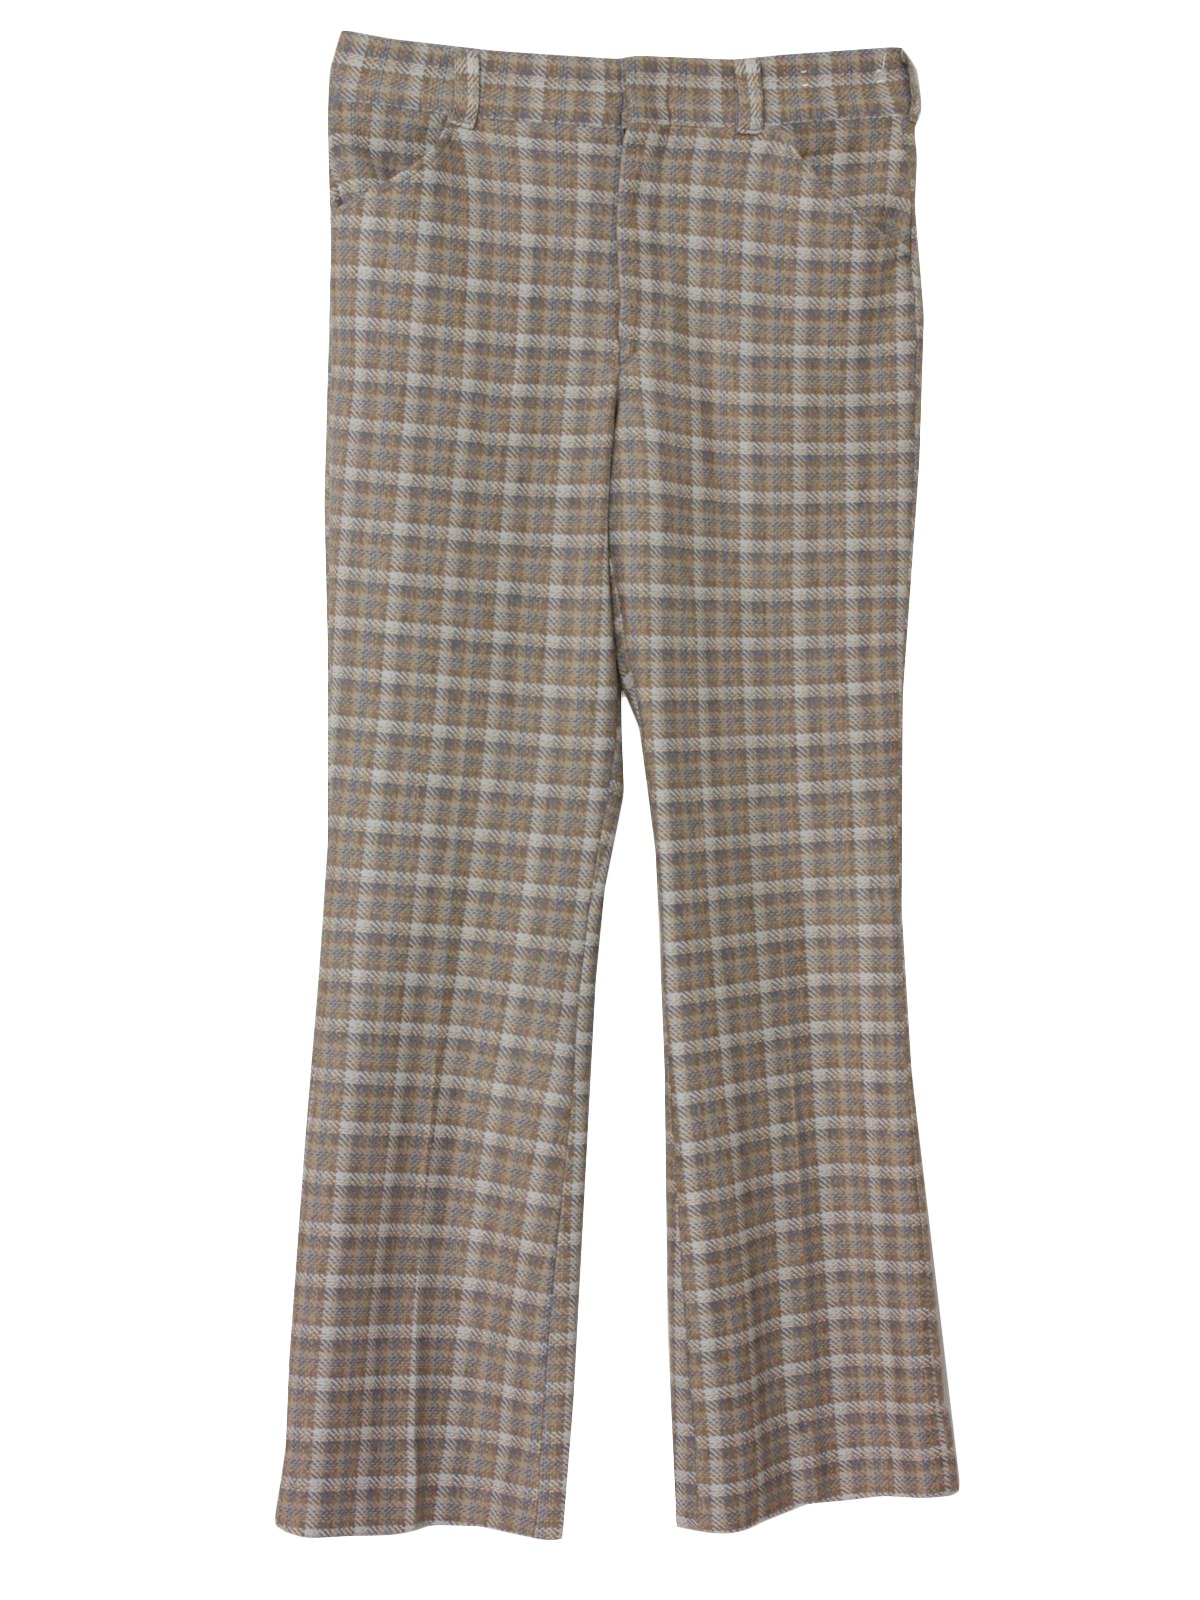 Retro 1970s Pants: 70s -Knit- Mens Tan, light brown, blue and cream ...